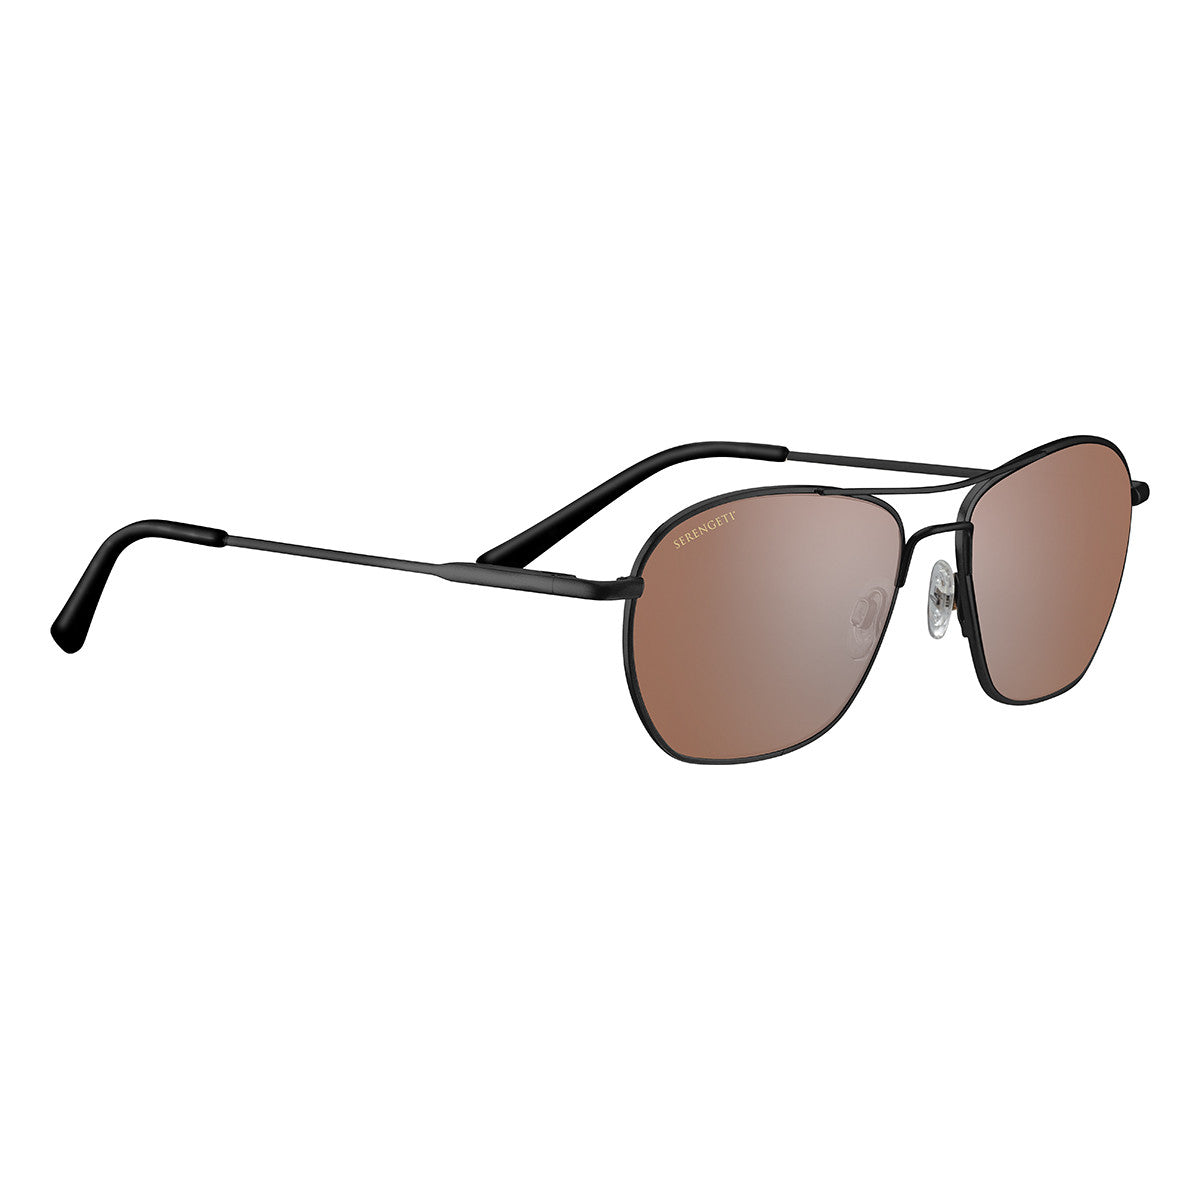 Serengeti Lunger Sunglasses  Matte Black Medium, Large